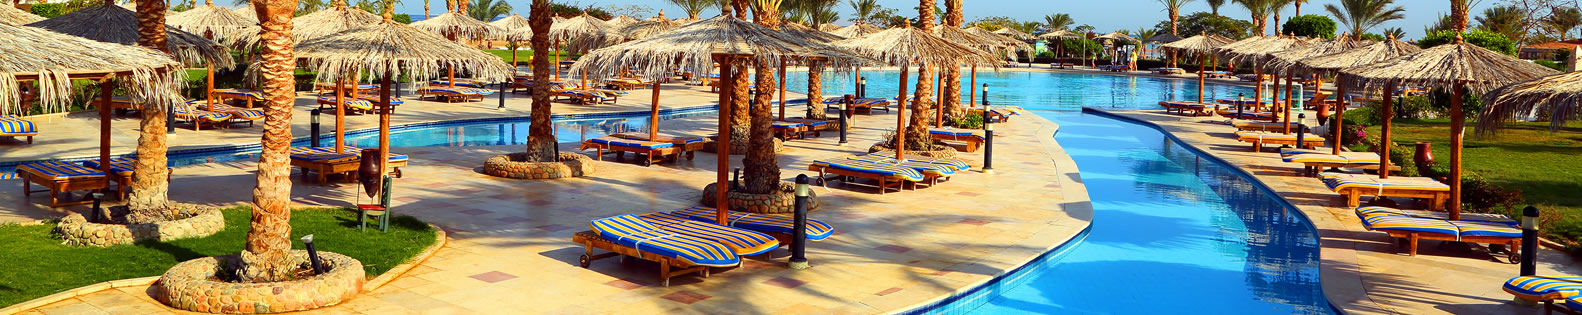 Relax in guaranteed holiday sunshine at your Dubai Holiday Rental